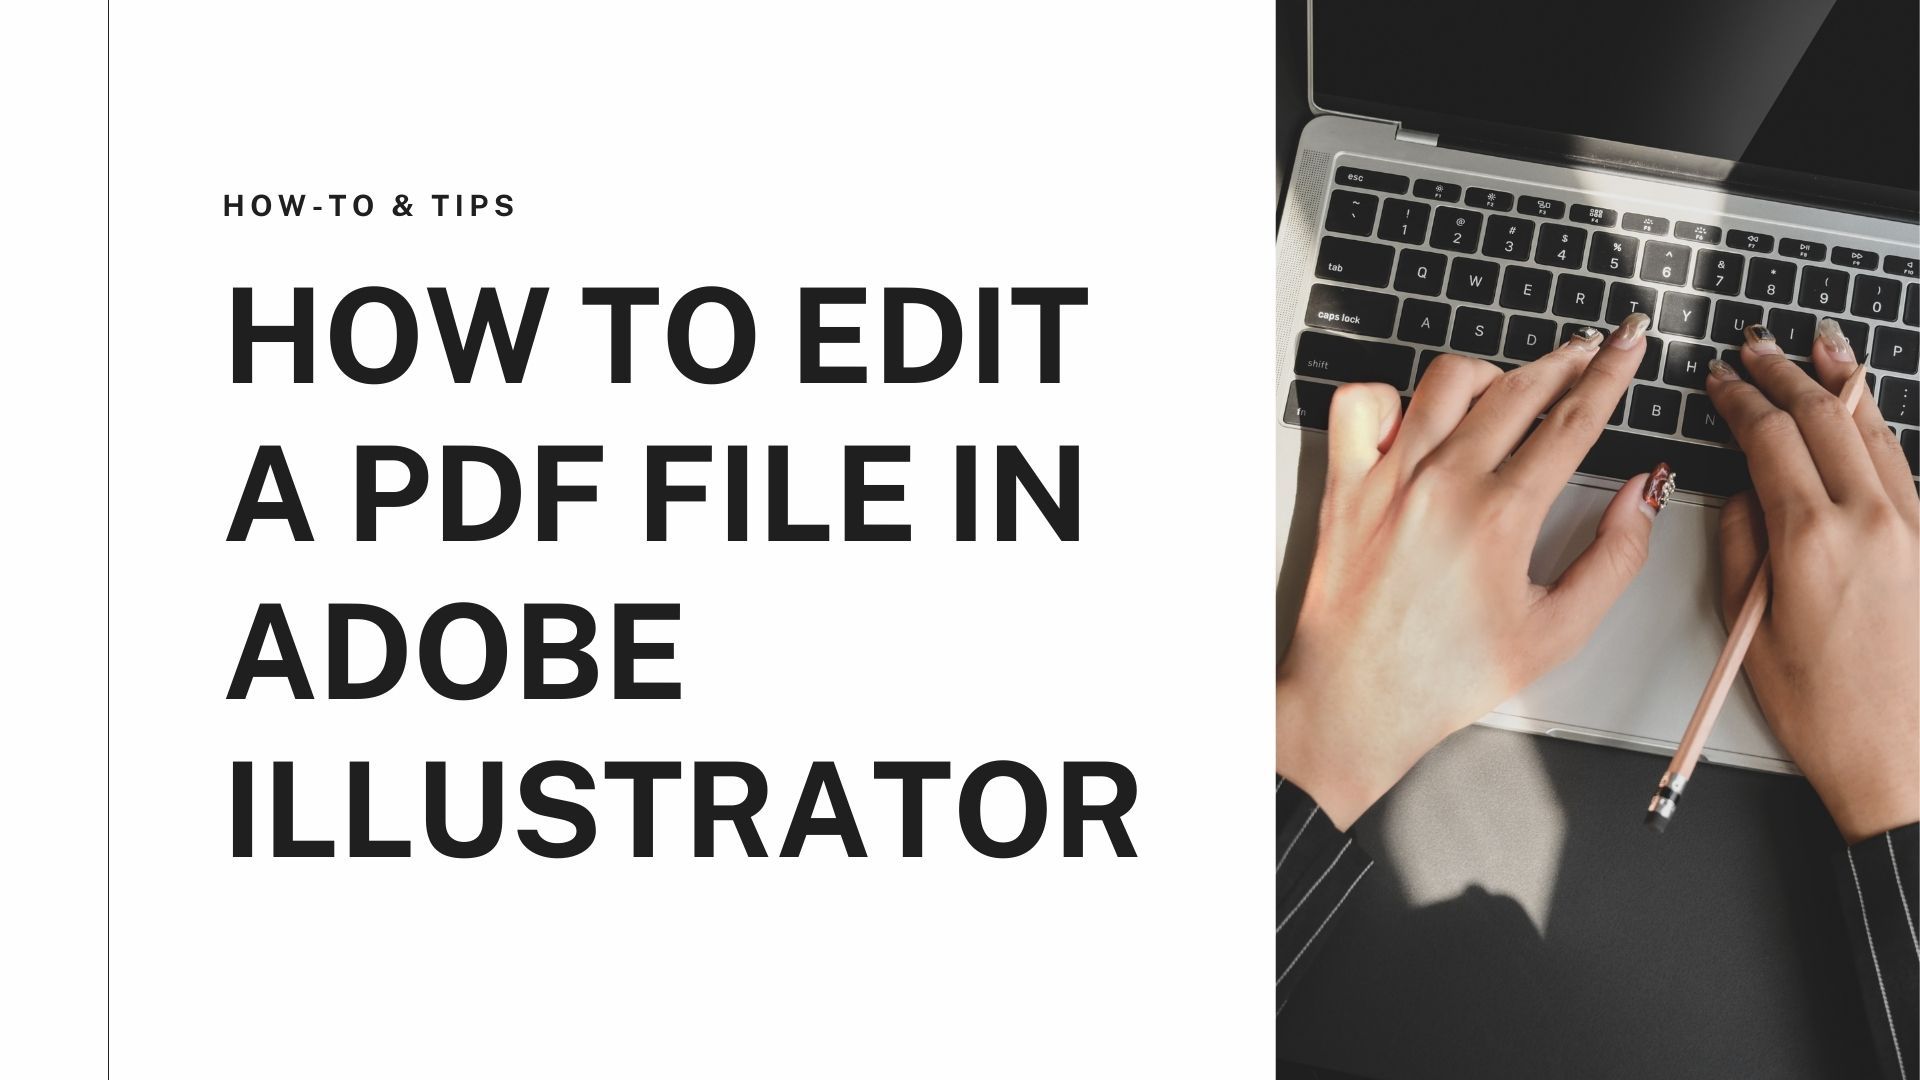 How to edit a PDF file in Adobe Illustrator.jpg